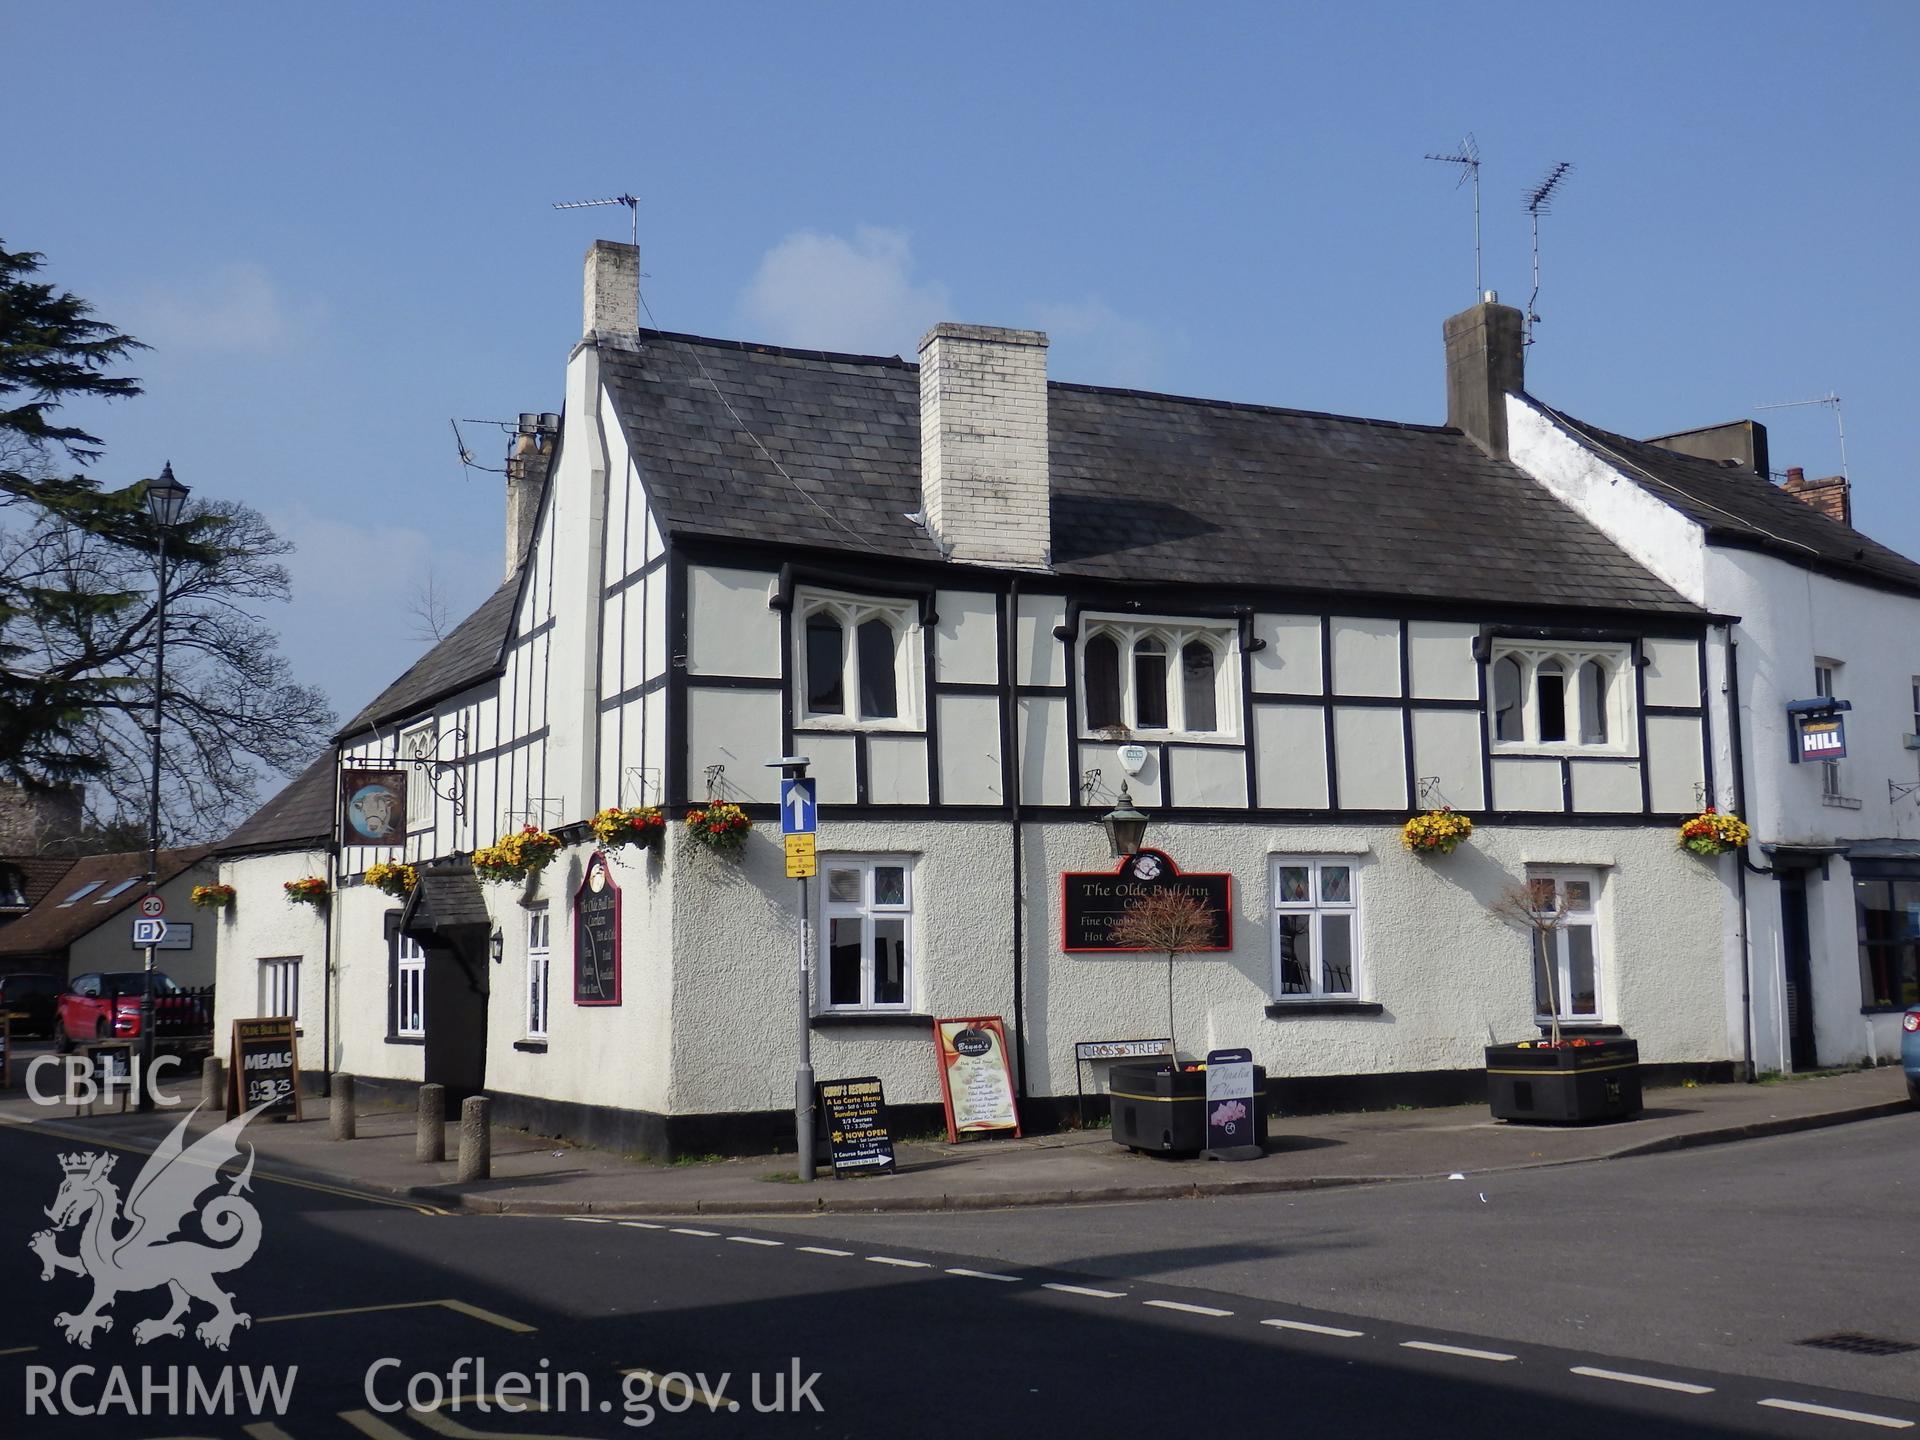 Colour photo of Old Bull Inn, Caerleon, taken by Paul R. Davis, dated 18th March 2015.